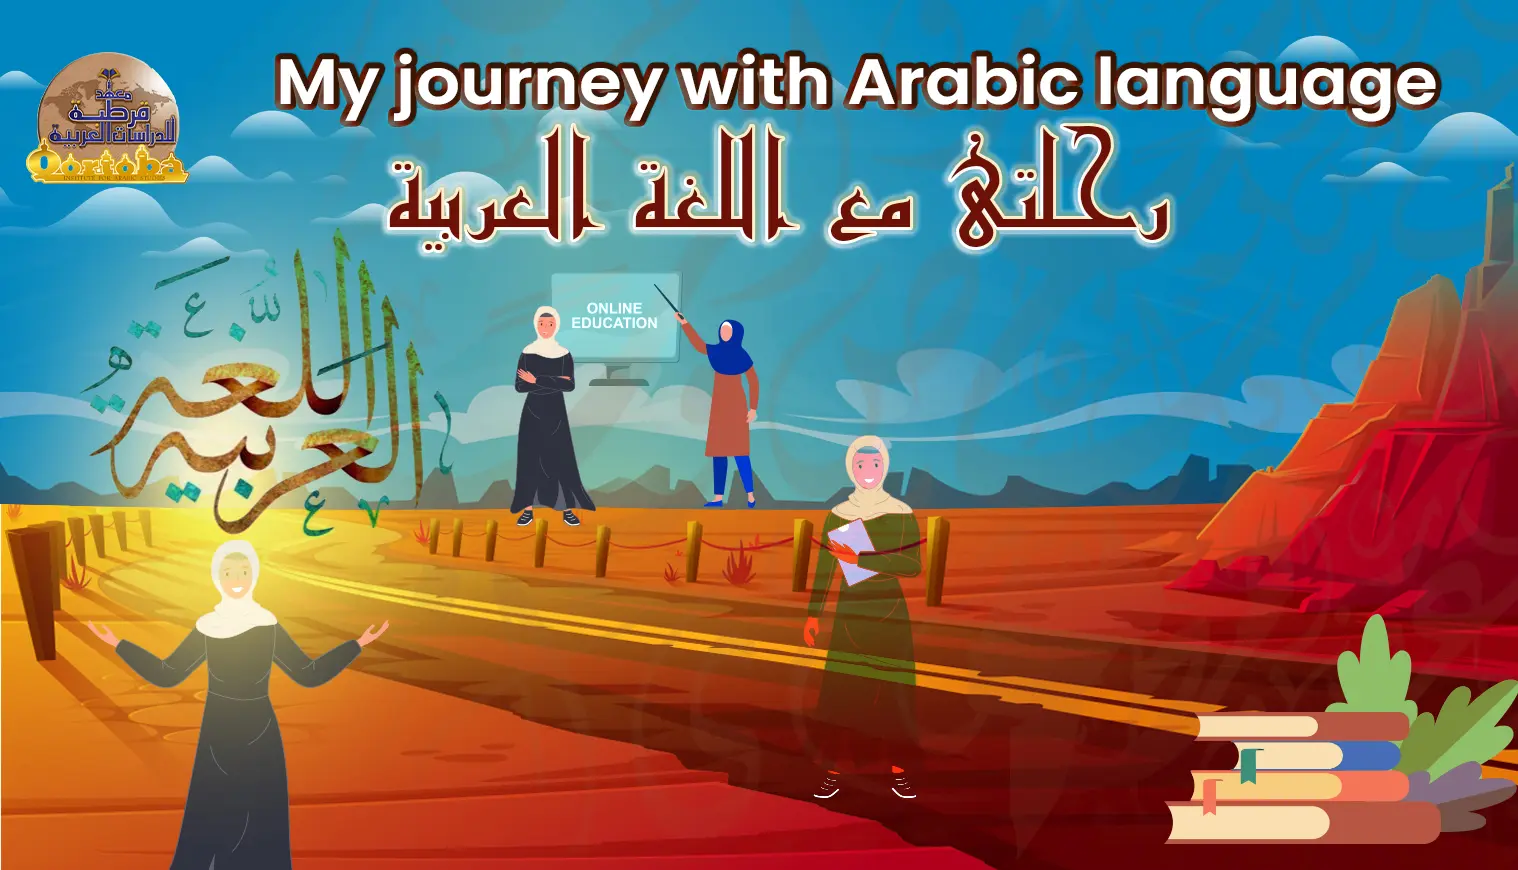 My journey with Arabic language by Saima Bhatty (UK) 2